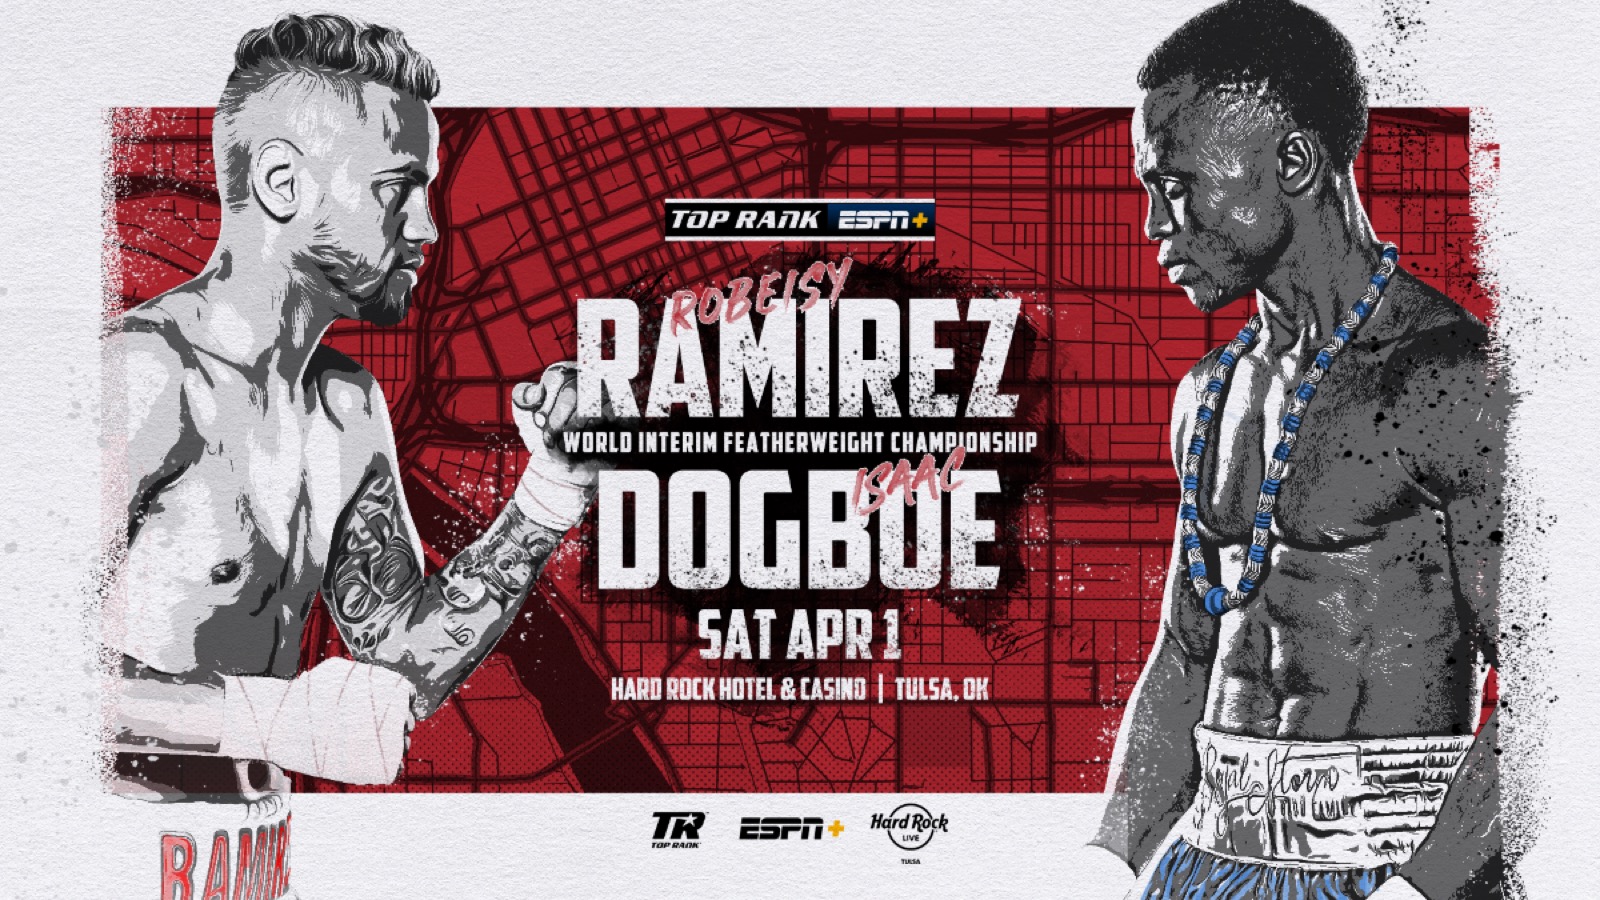 Ramirez vs Dogboe - ESPN - April 1 - 10 pm ET